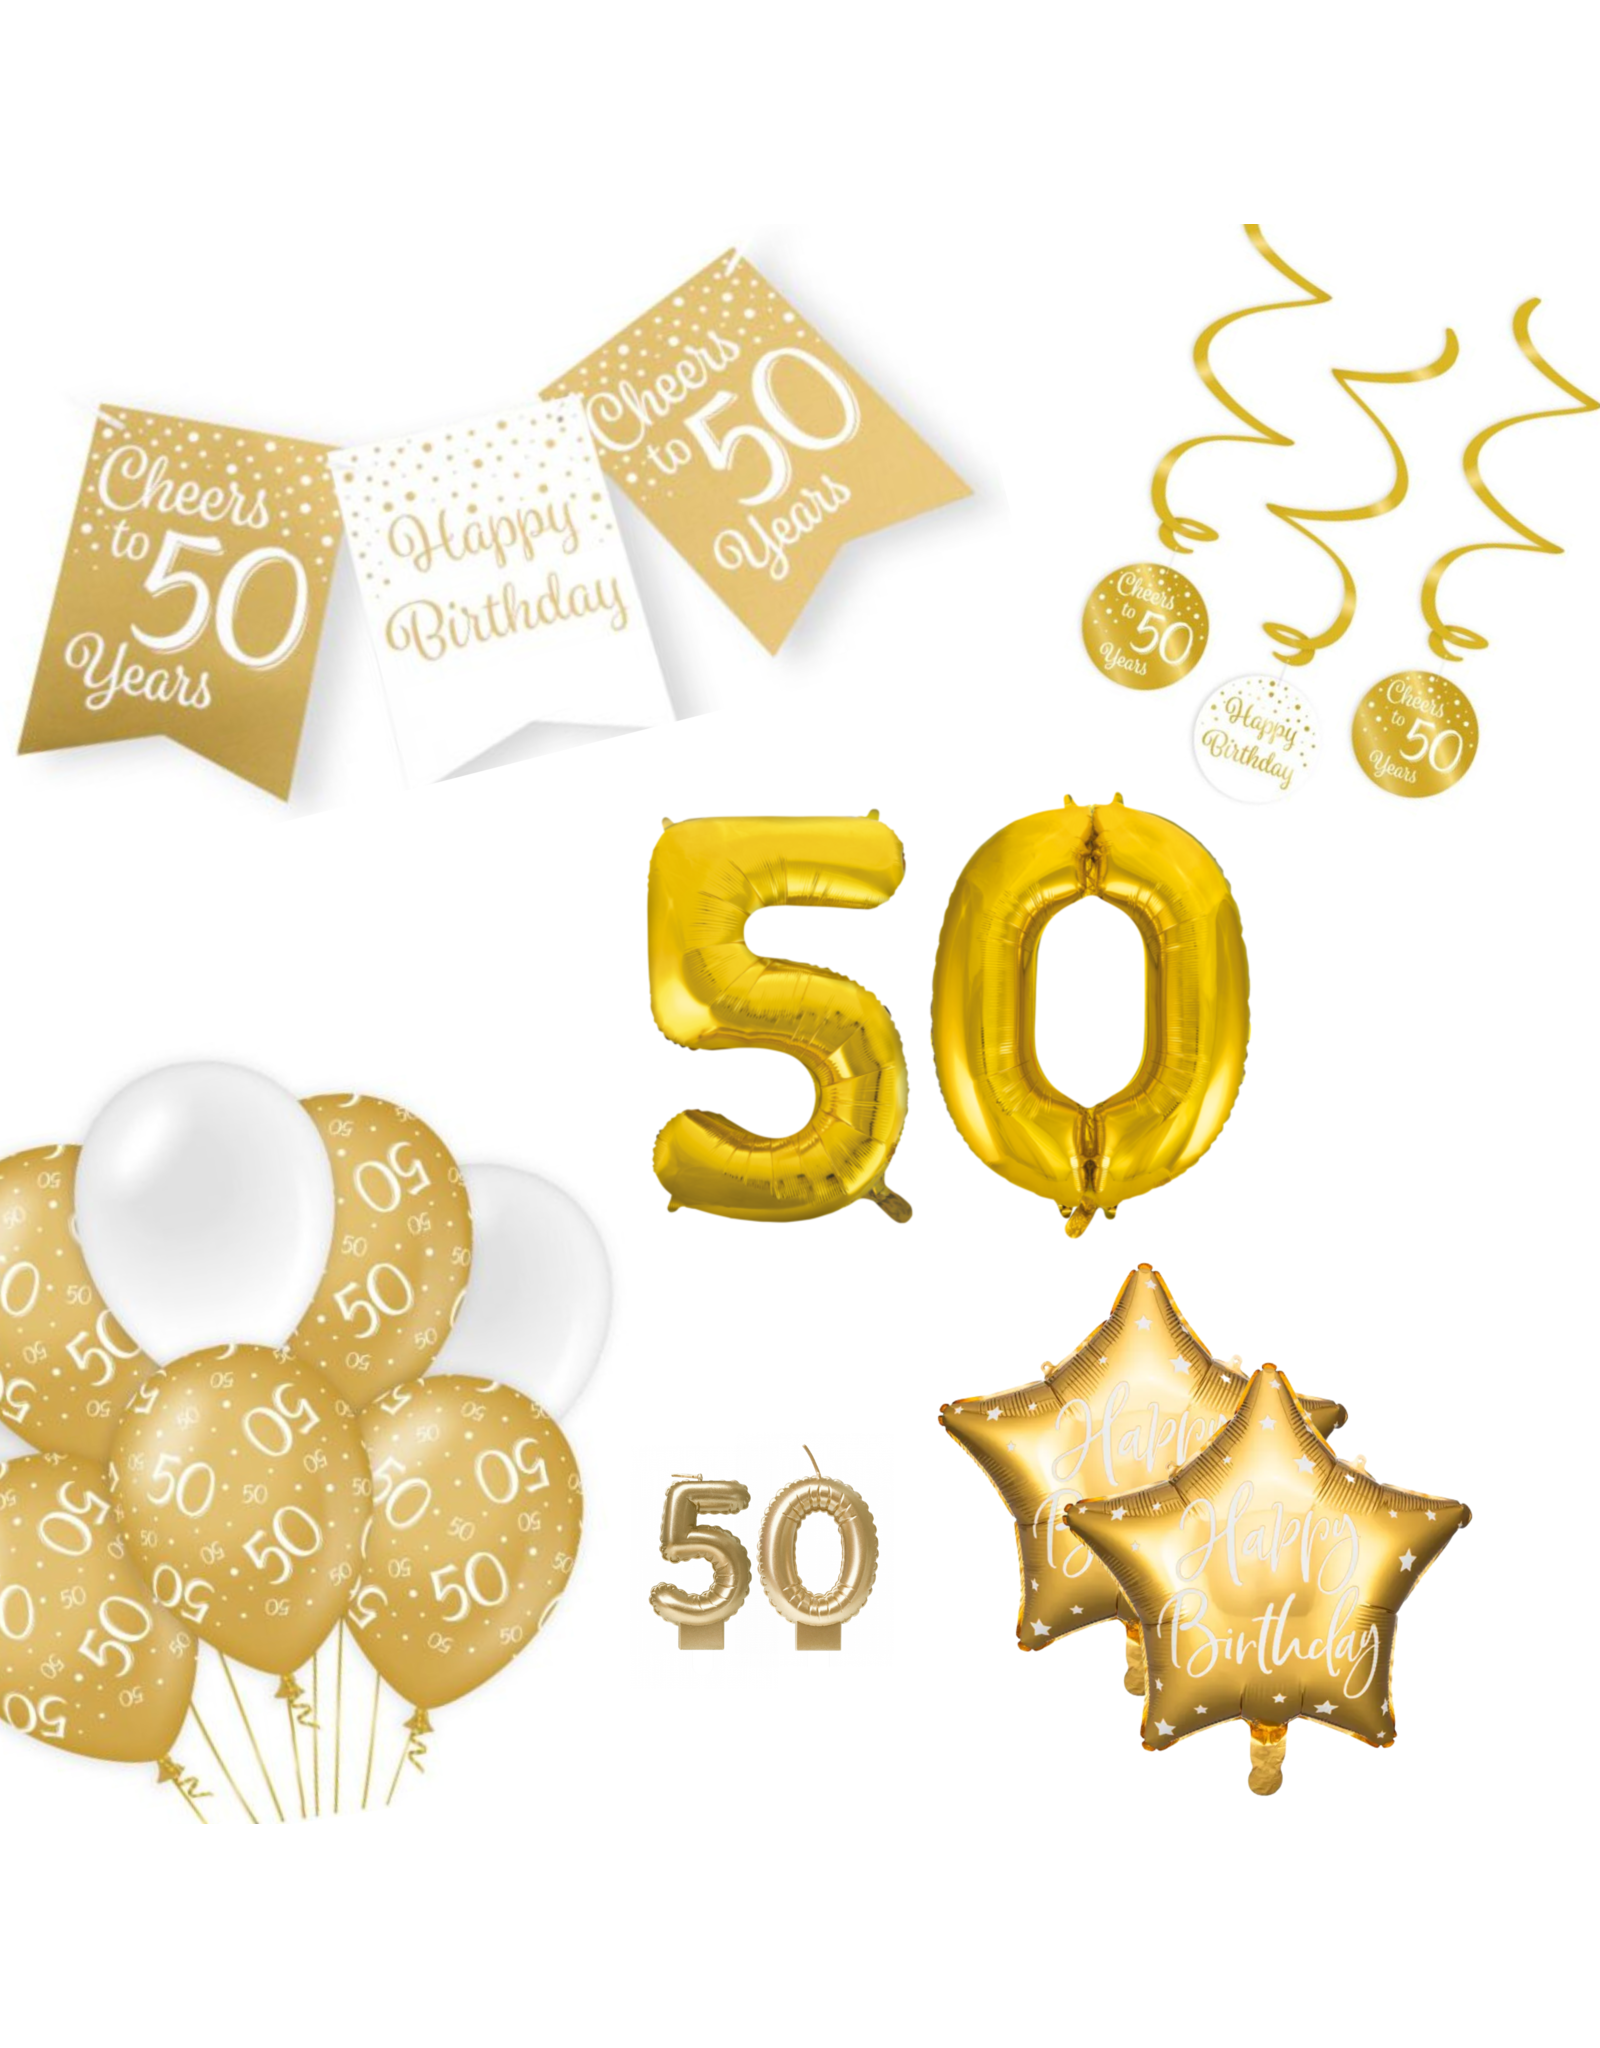 WOW partypakket | 50 jaar goud/wit